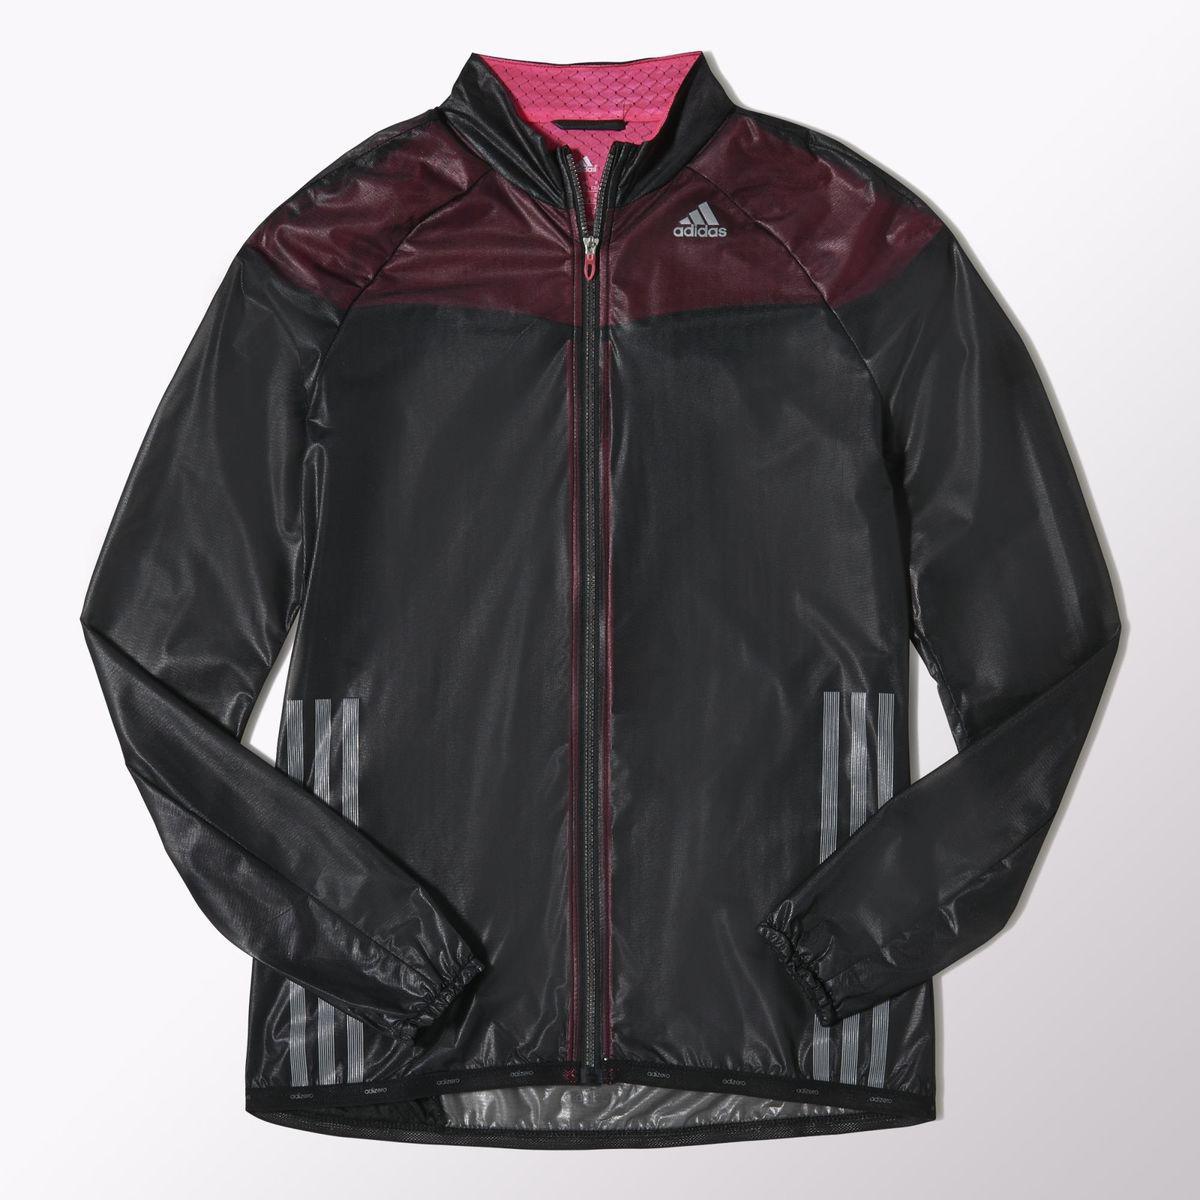 Adidas Womens Adizero Climaproof Jacket - Black - Tennisnuts.com